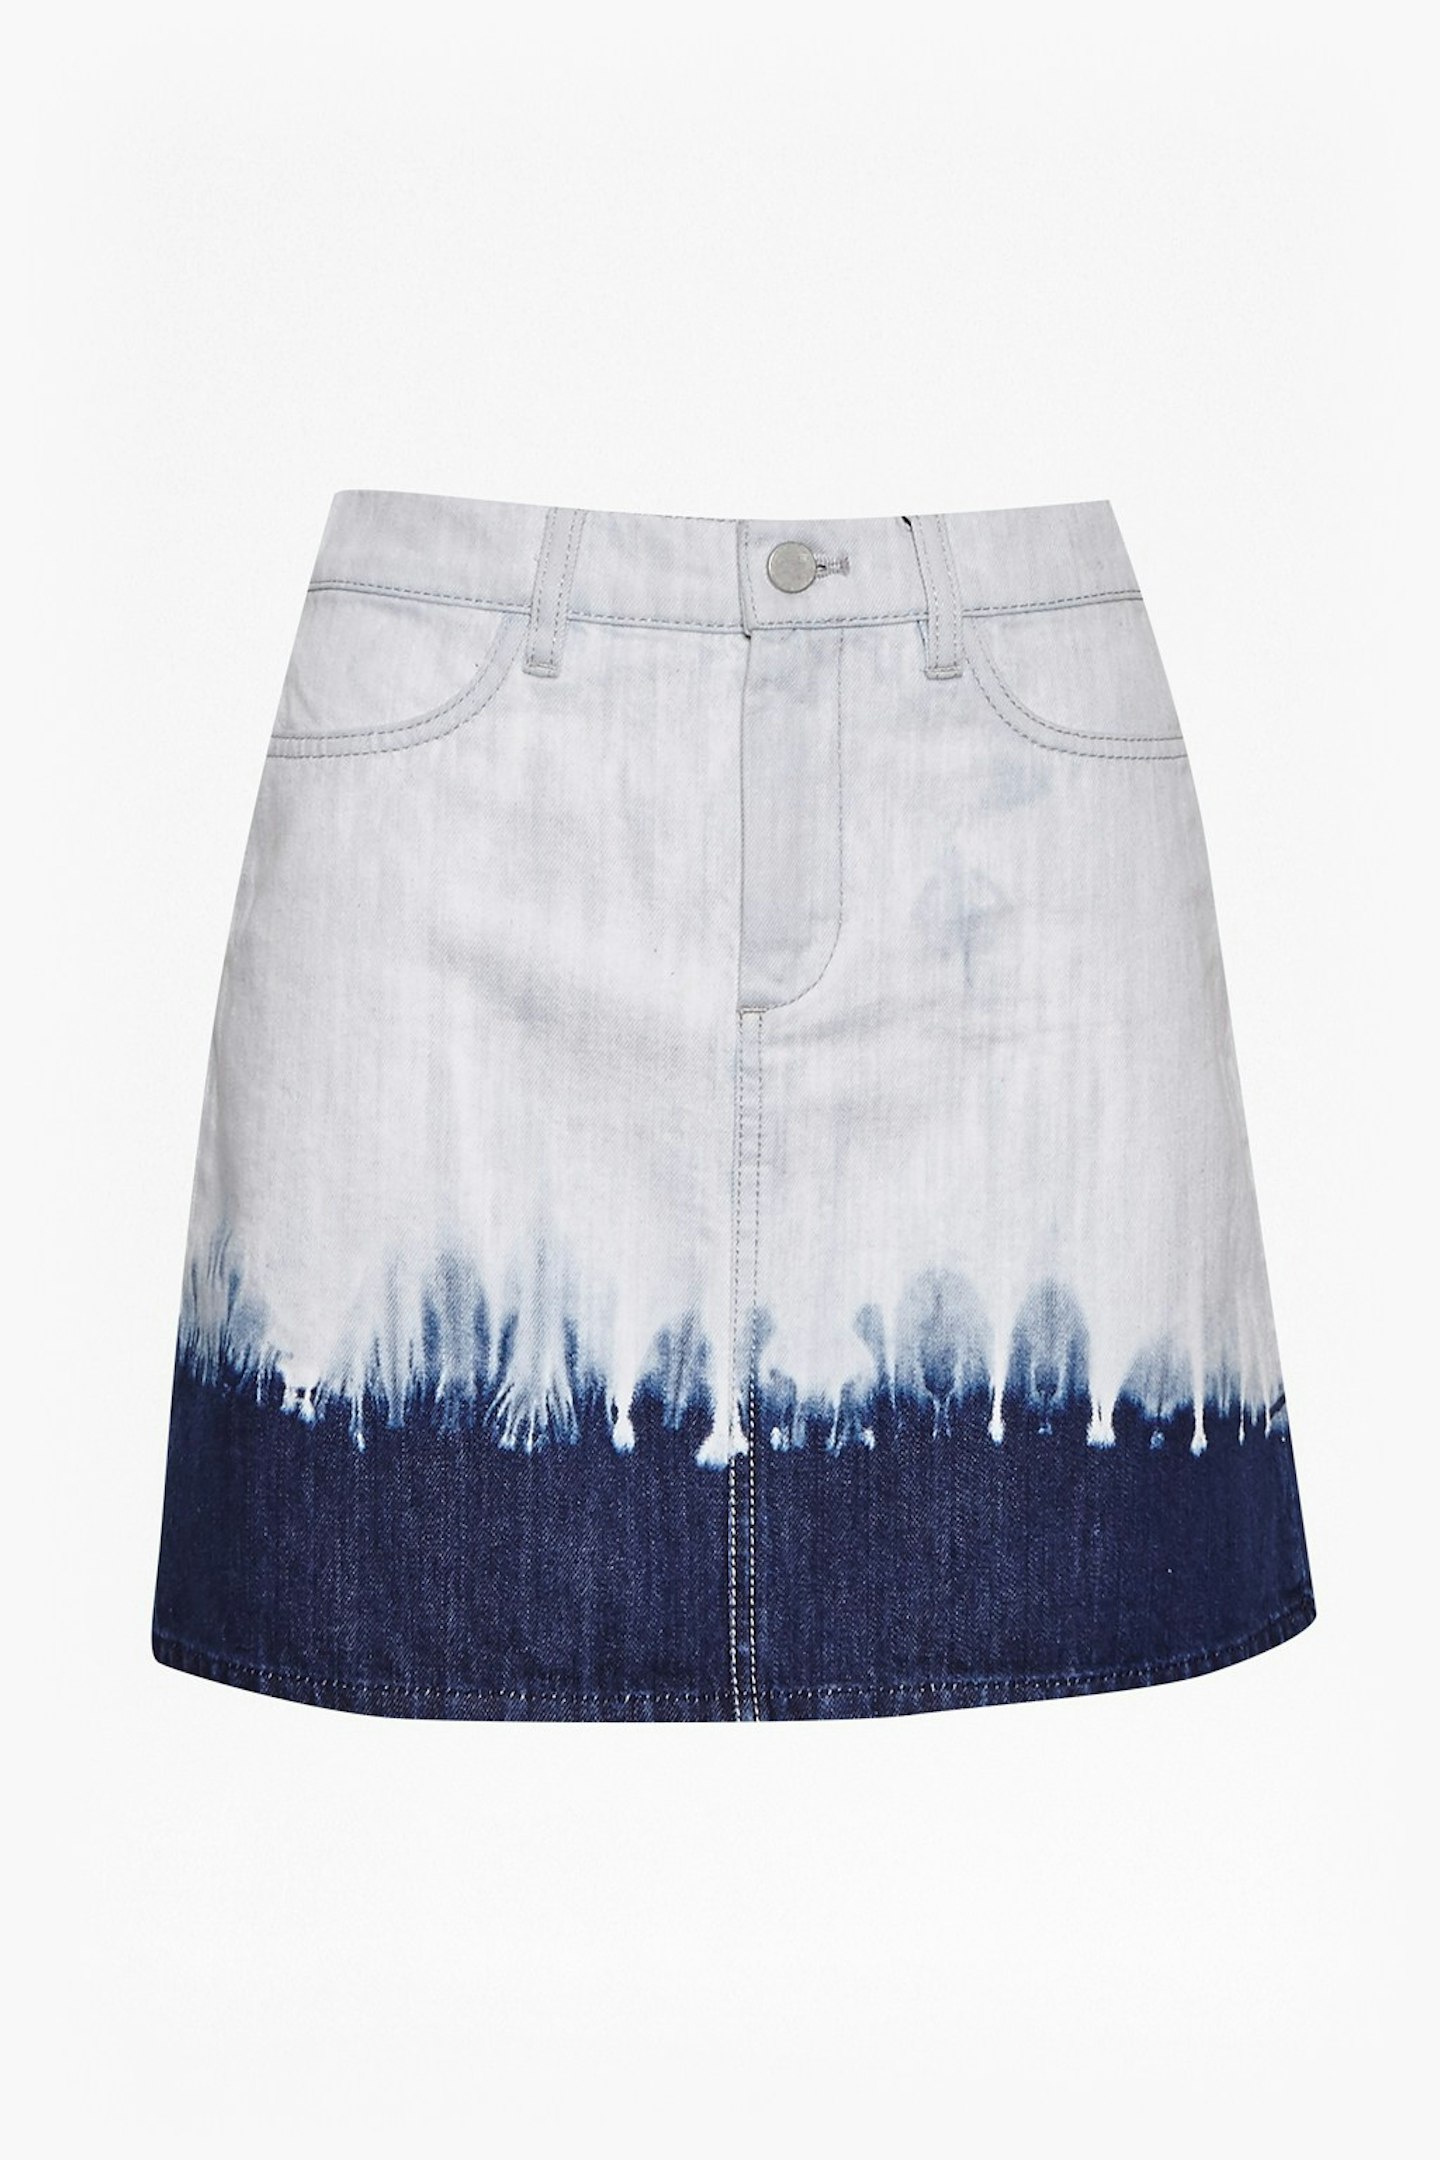 French Connection tie dye hem mini skirt now £22